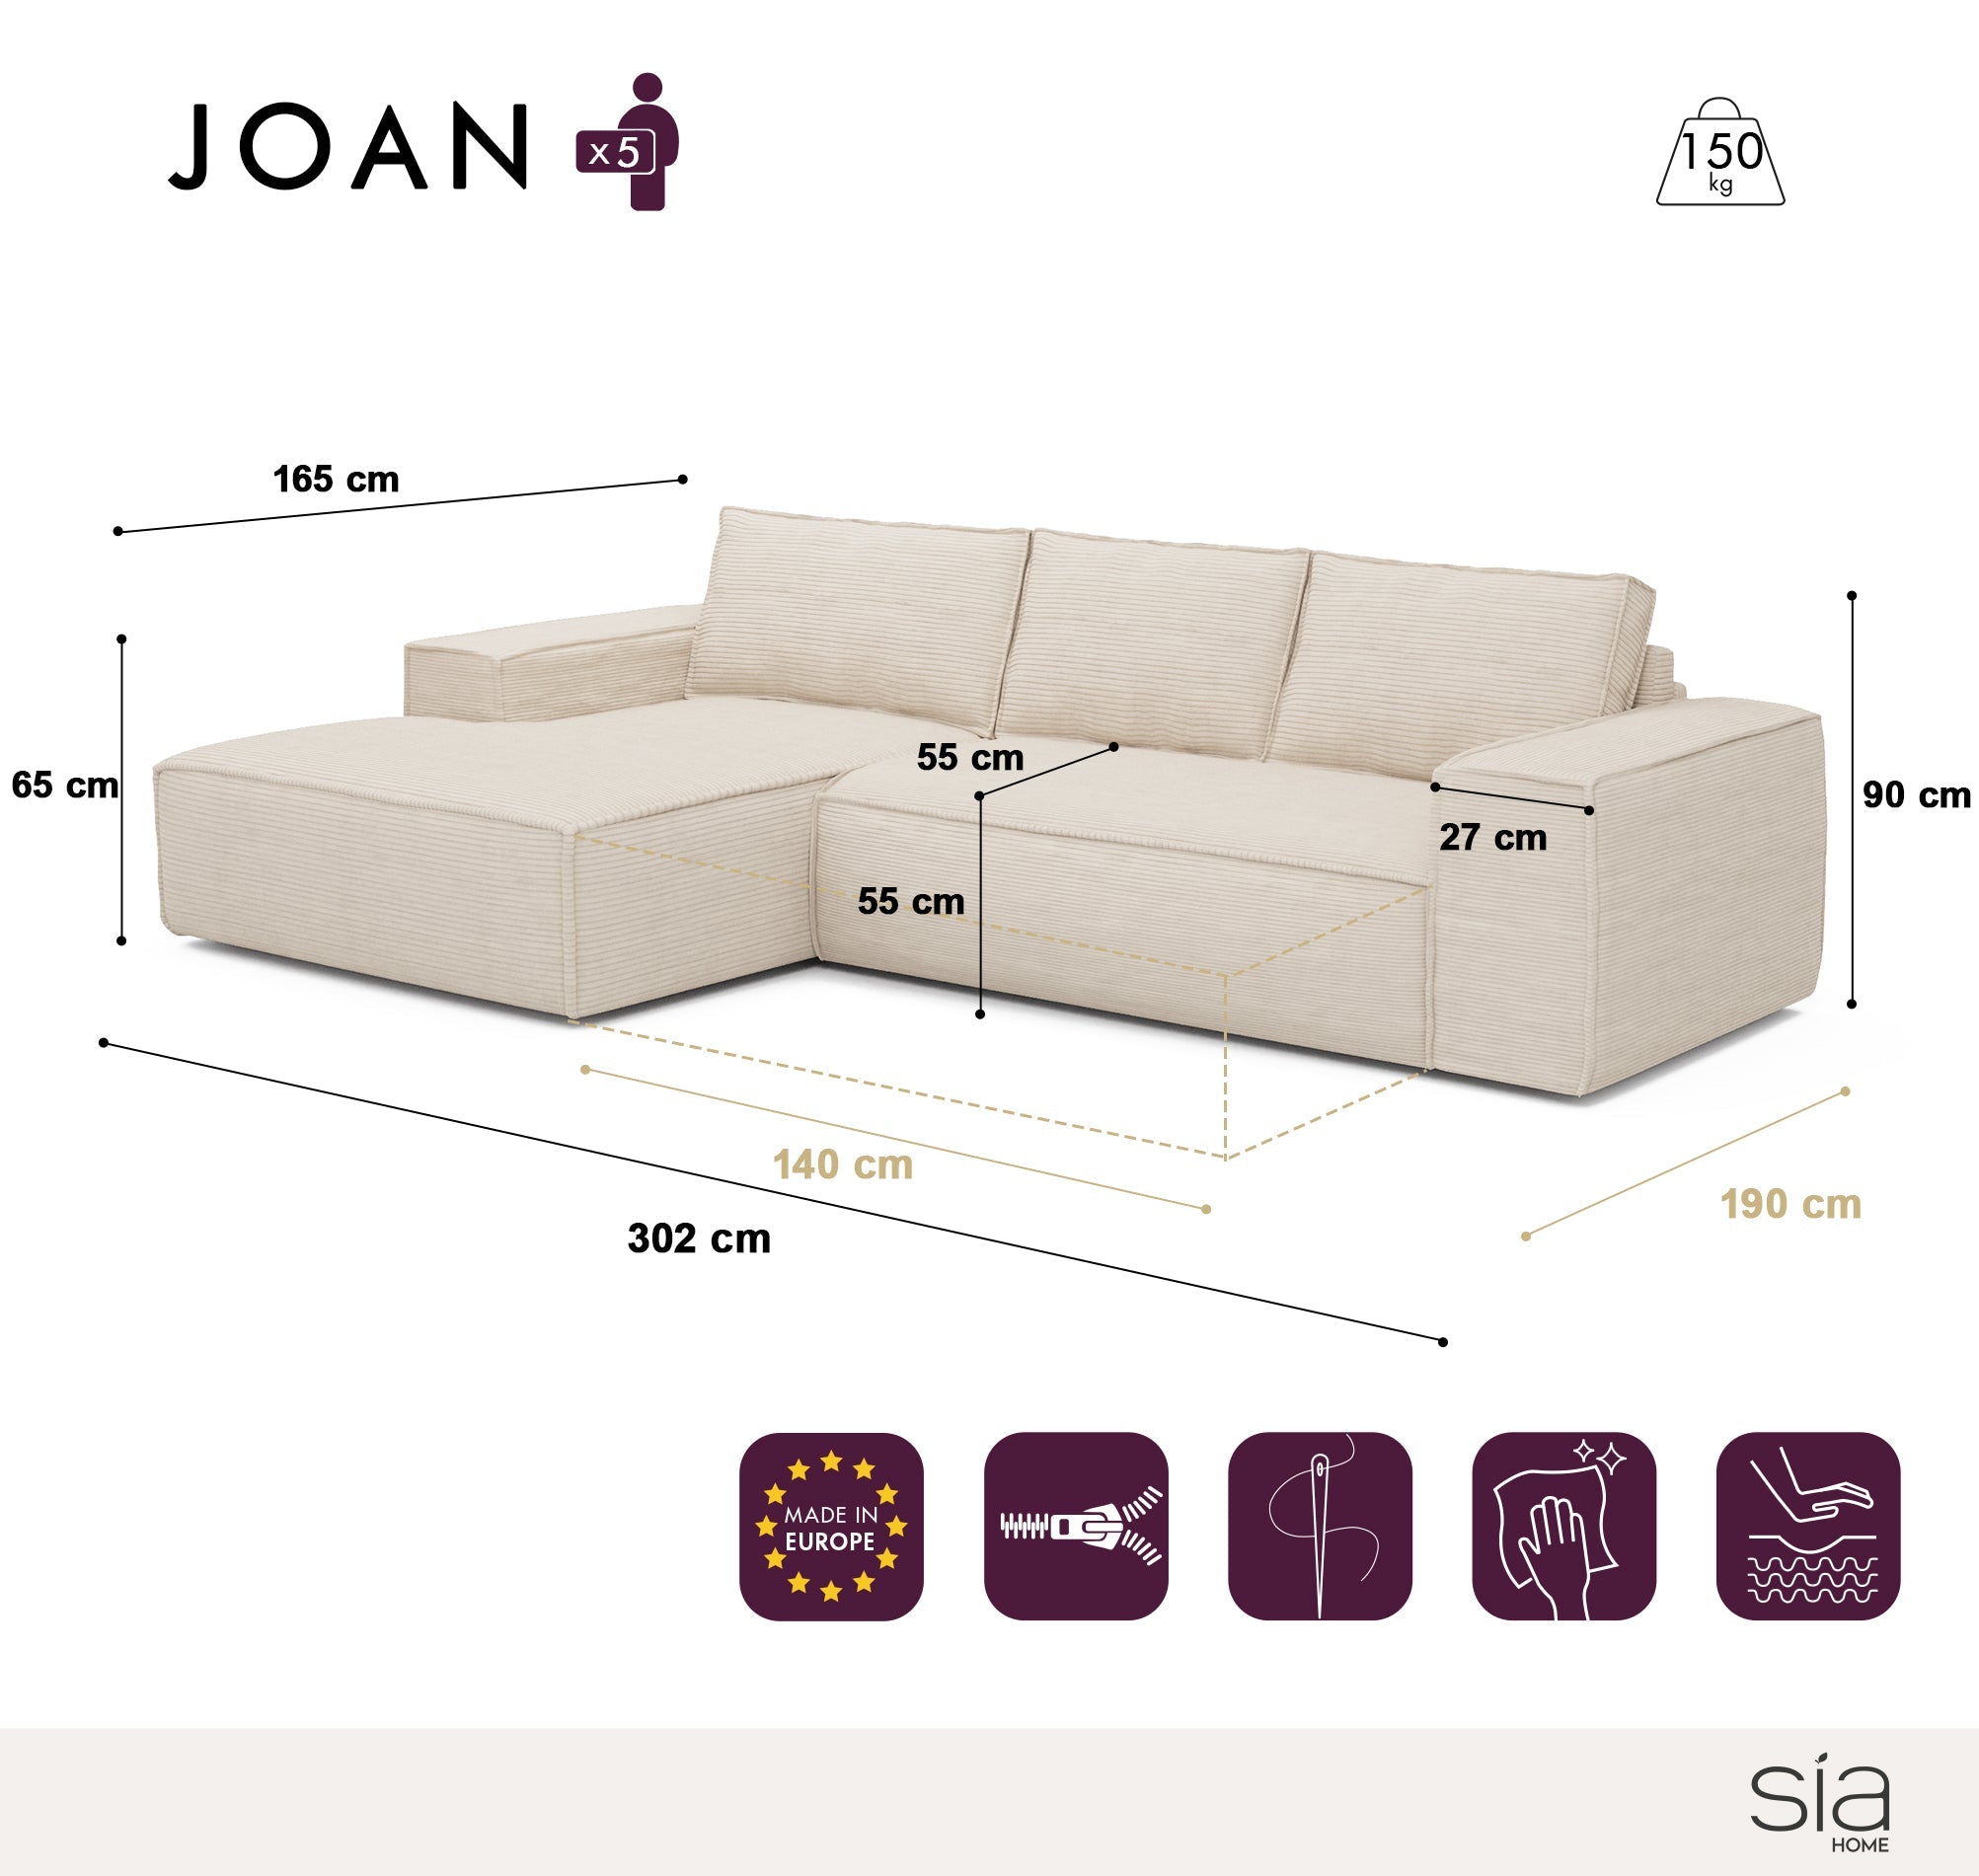 Canapé Convertible d'Angle gauche Joan